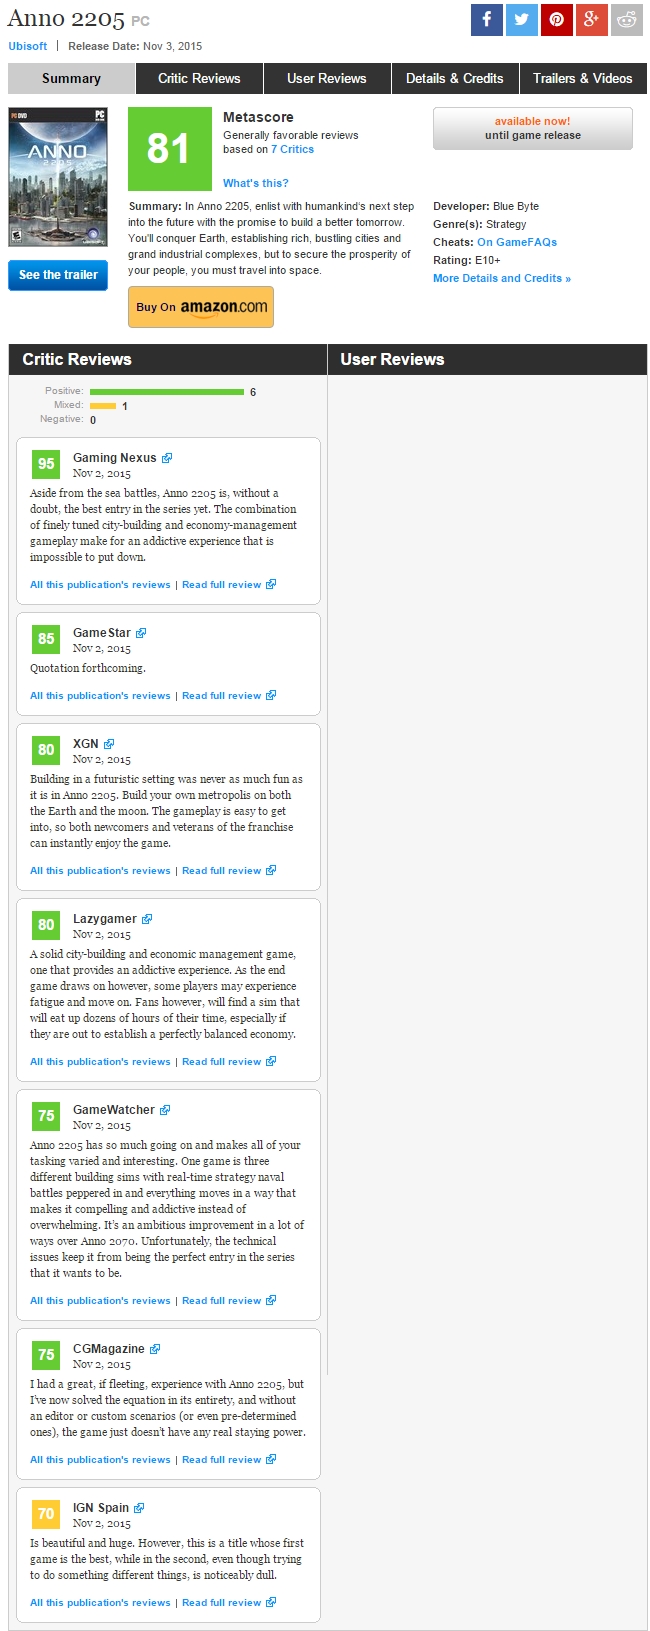 'Anno 2205 for PC Reviews - Metacritic' - www_metacritic_com_game_pc_anno-2205_recent-sort=metascore - 223.jpg